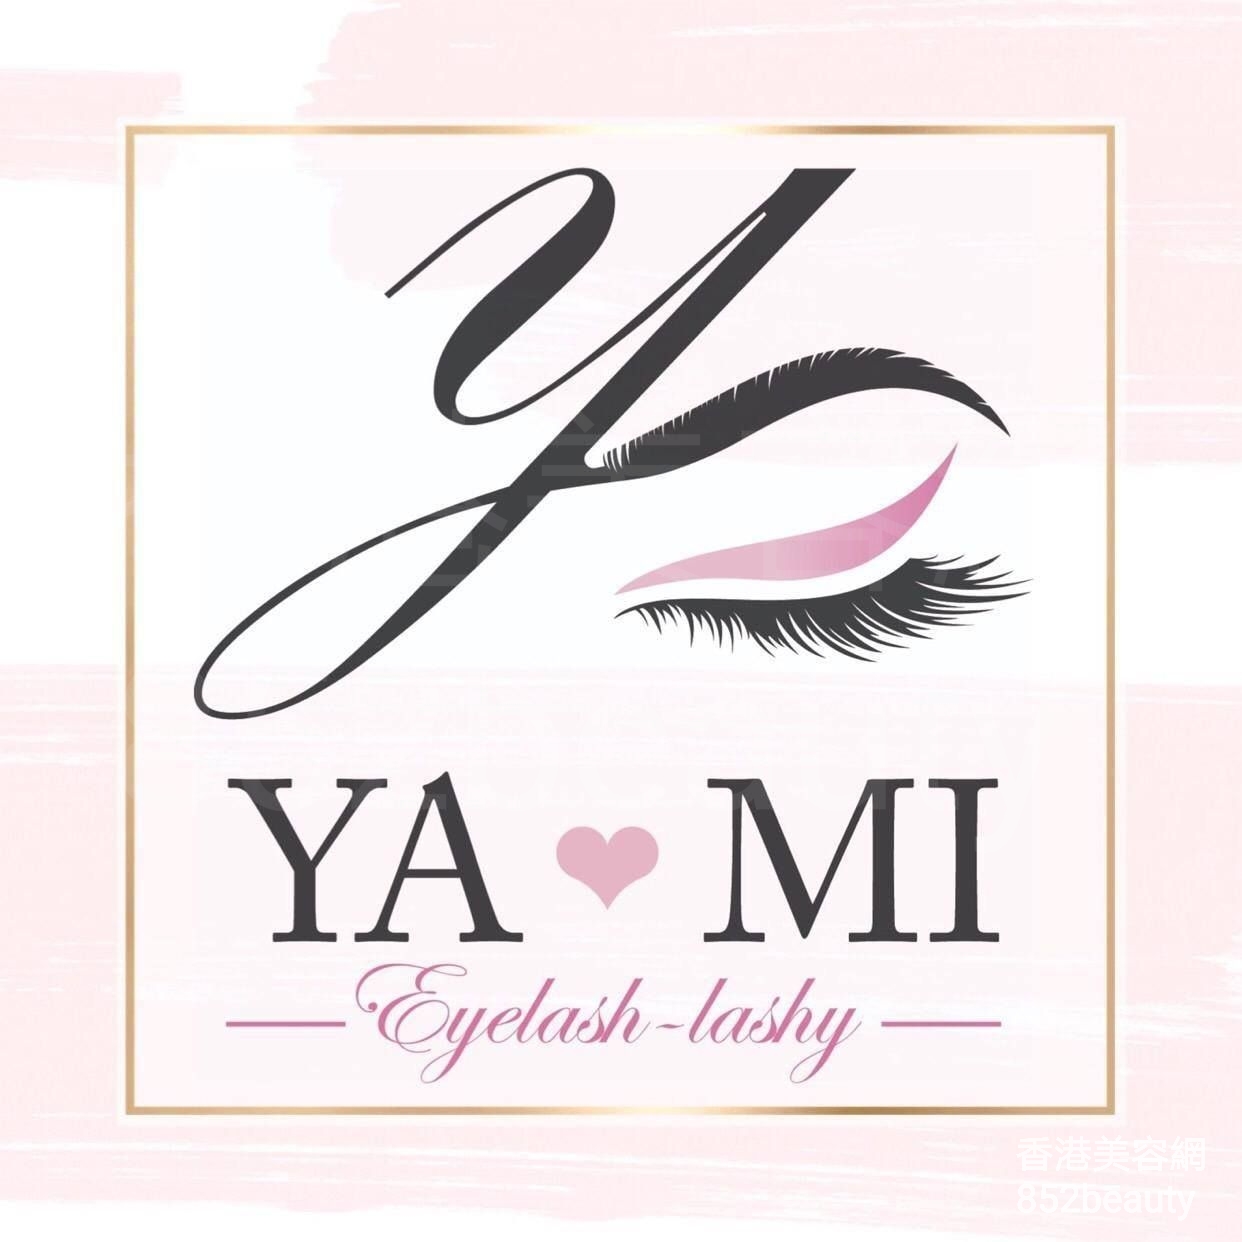 香港美容網 Hong Kong Beauty Salon 美容院 / 美容師: Ya-Mi Eyelash-Lashy